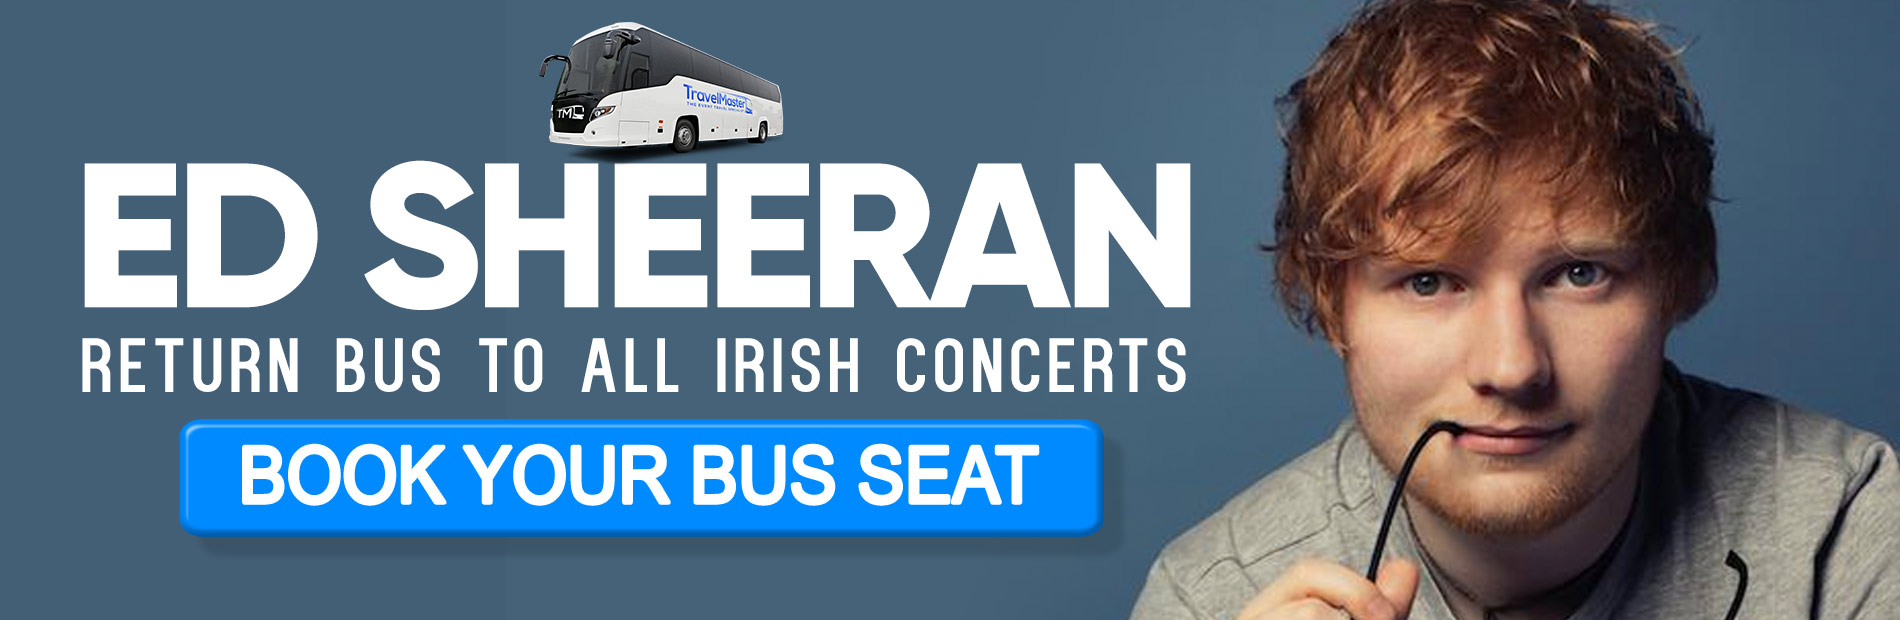 Bus to Ed Sheeran